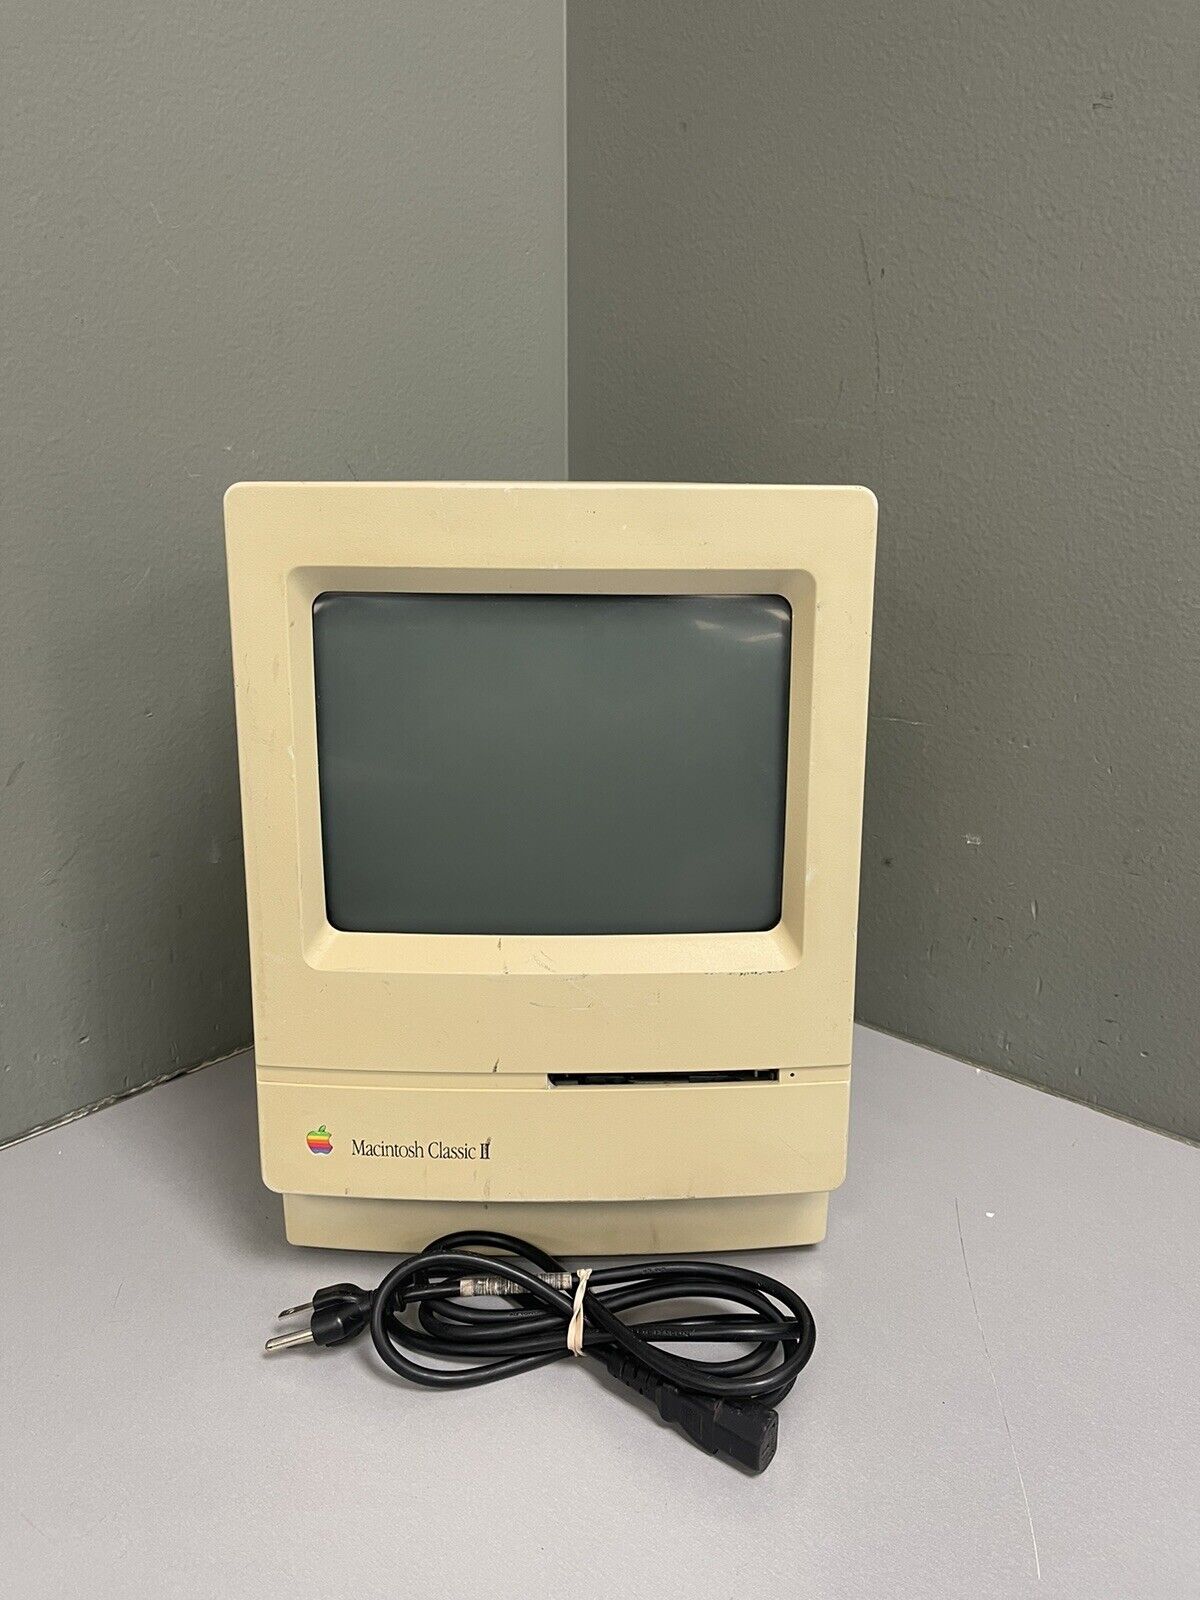 Vintage Apple M4150 Macintosh Classic II Personal Desktop Computer